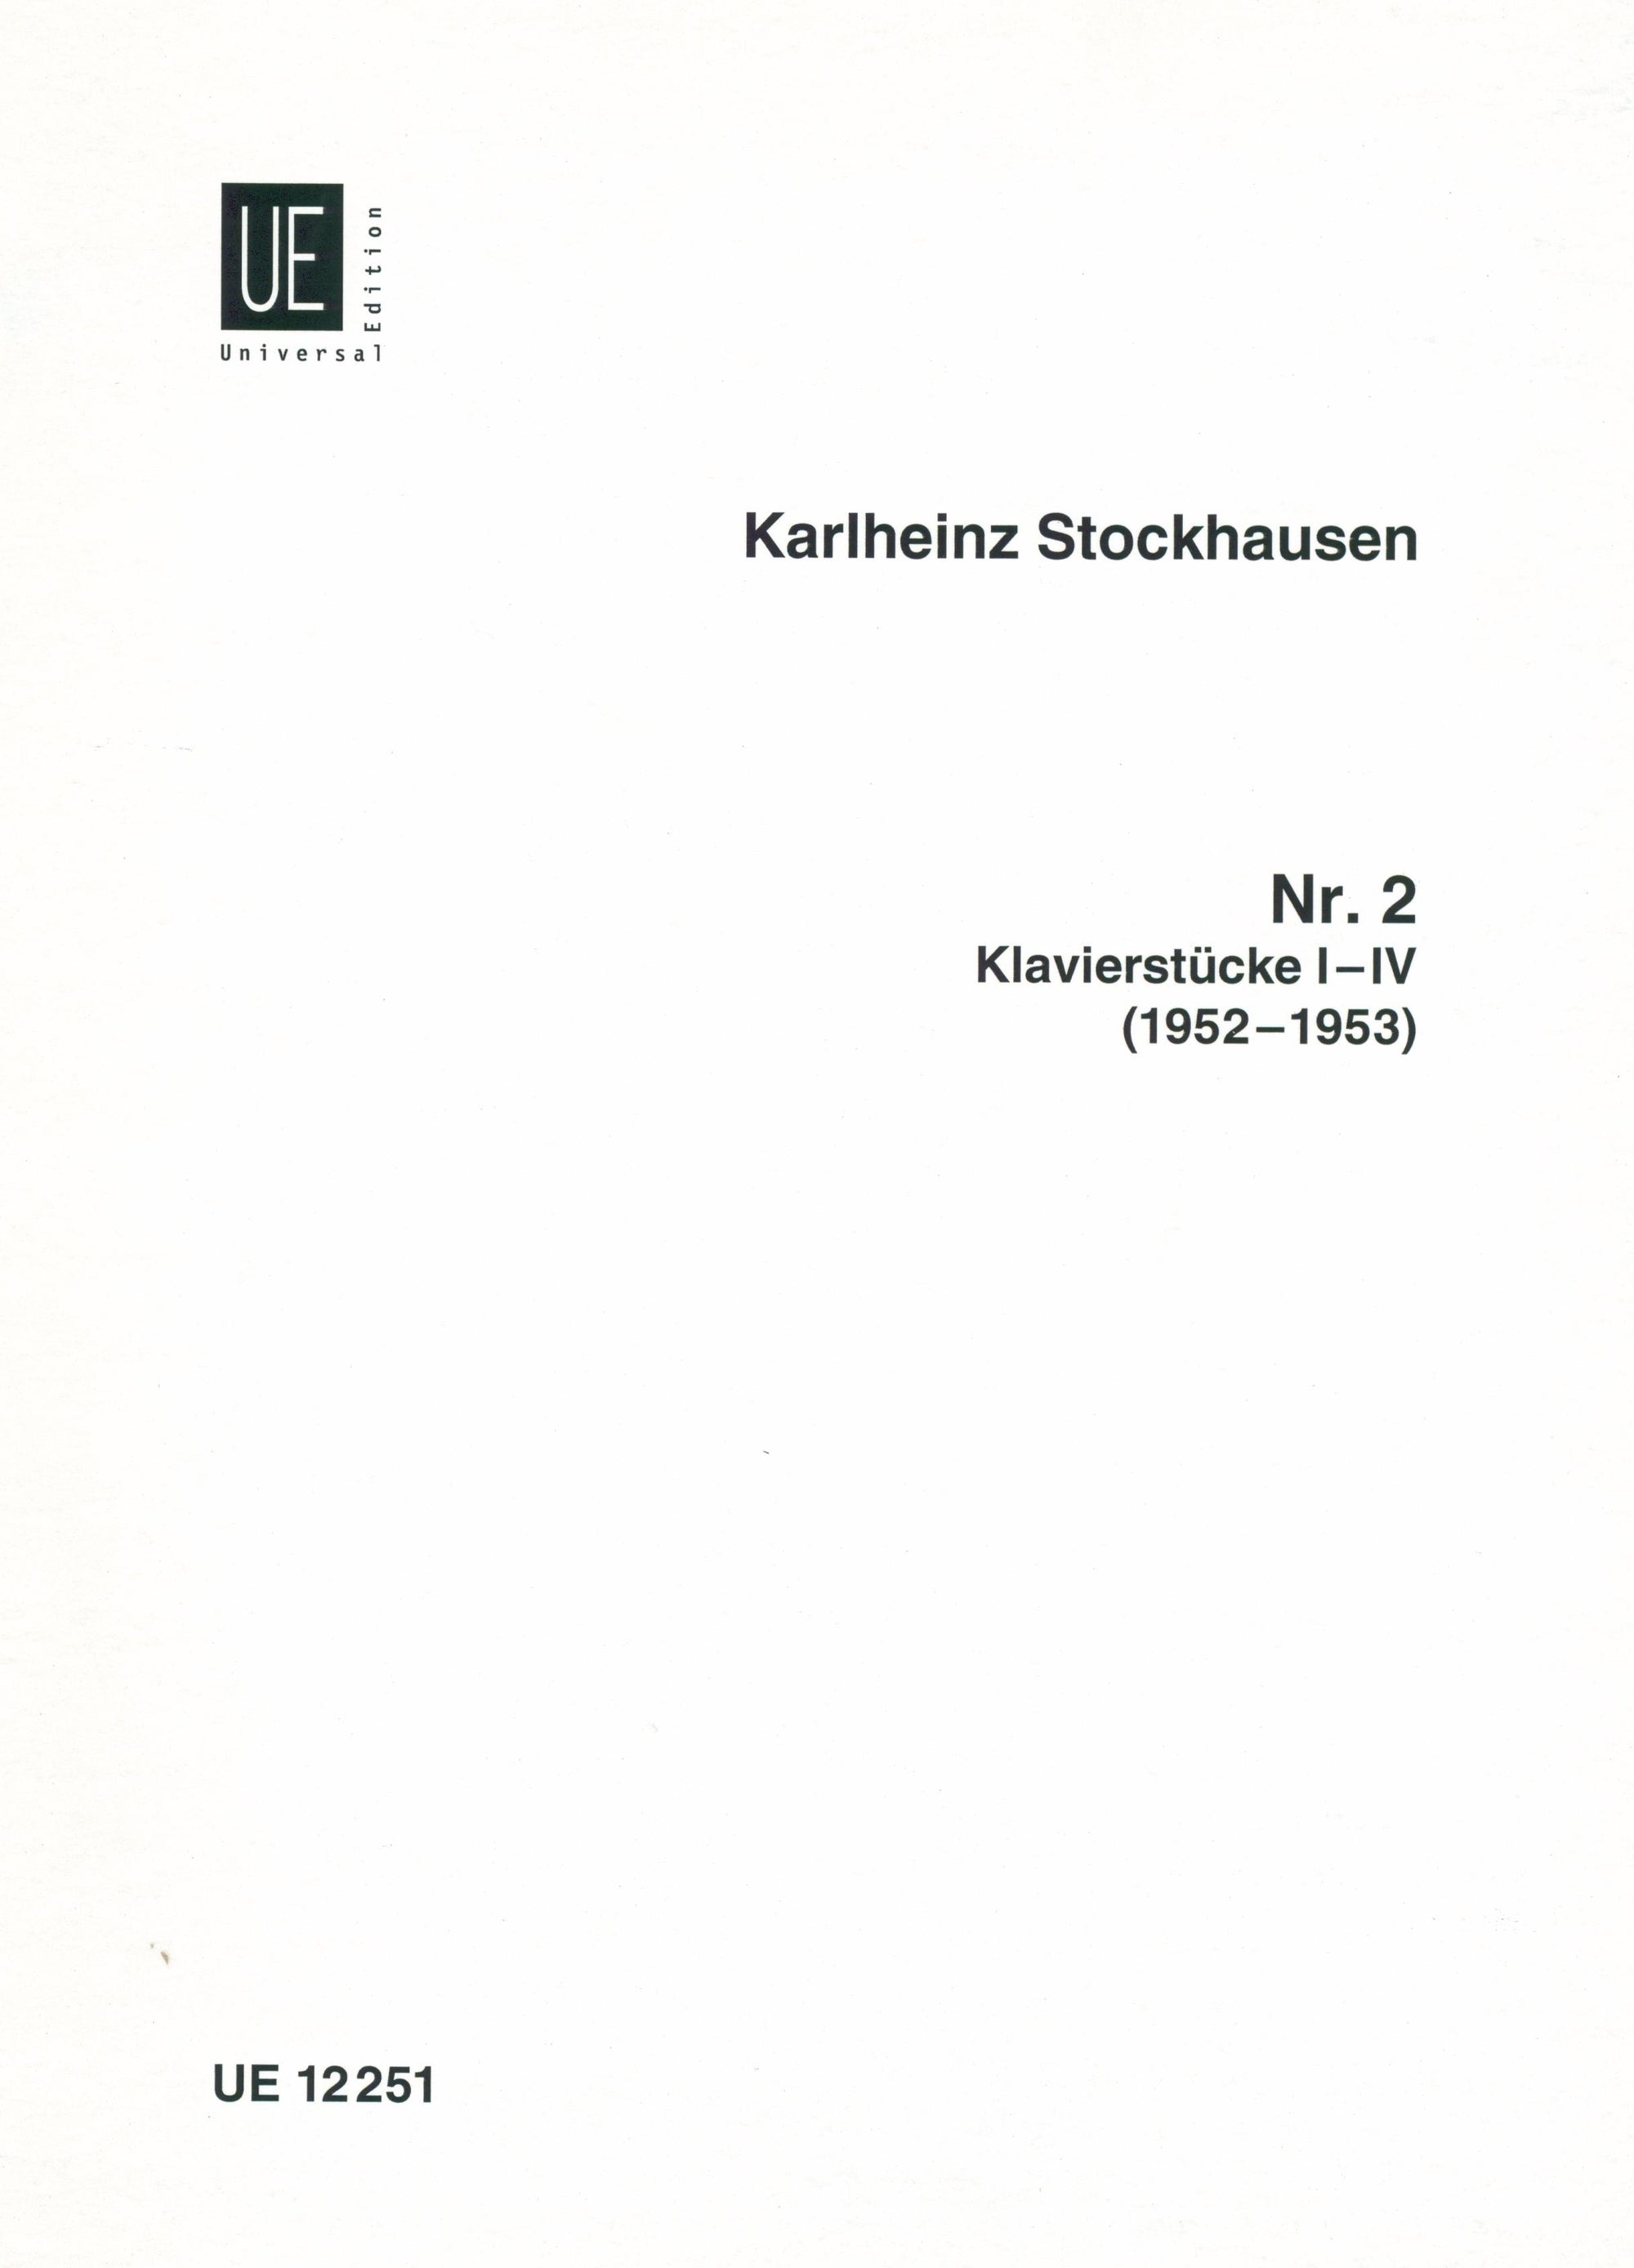 Stockhausen: Klavierstücke I-IV